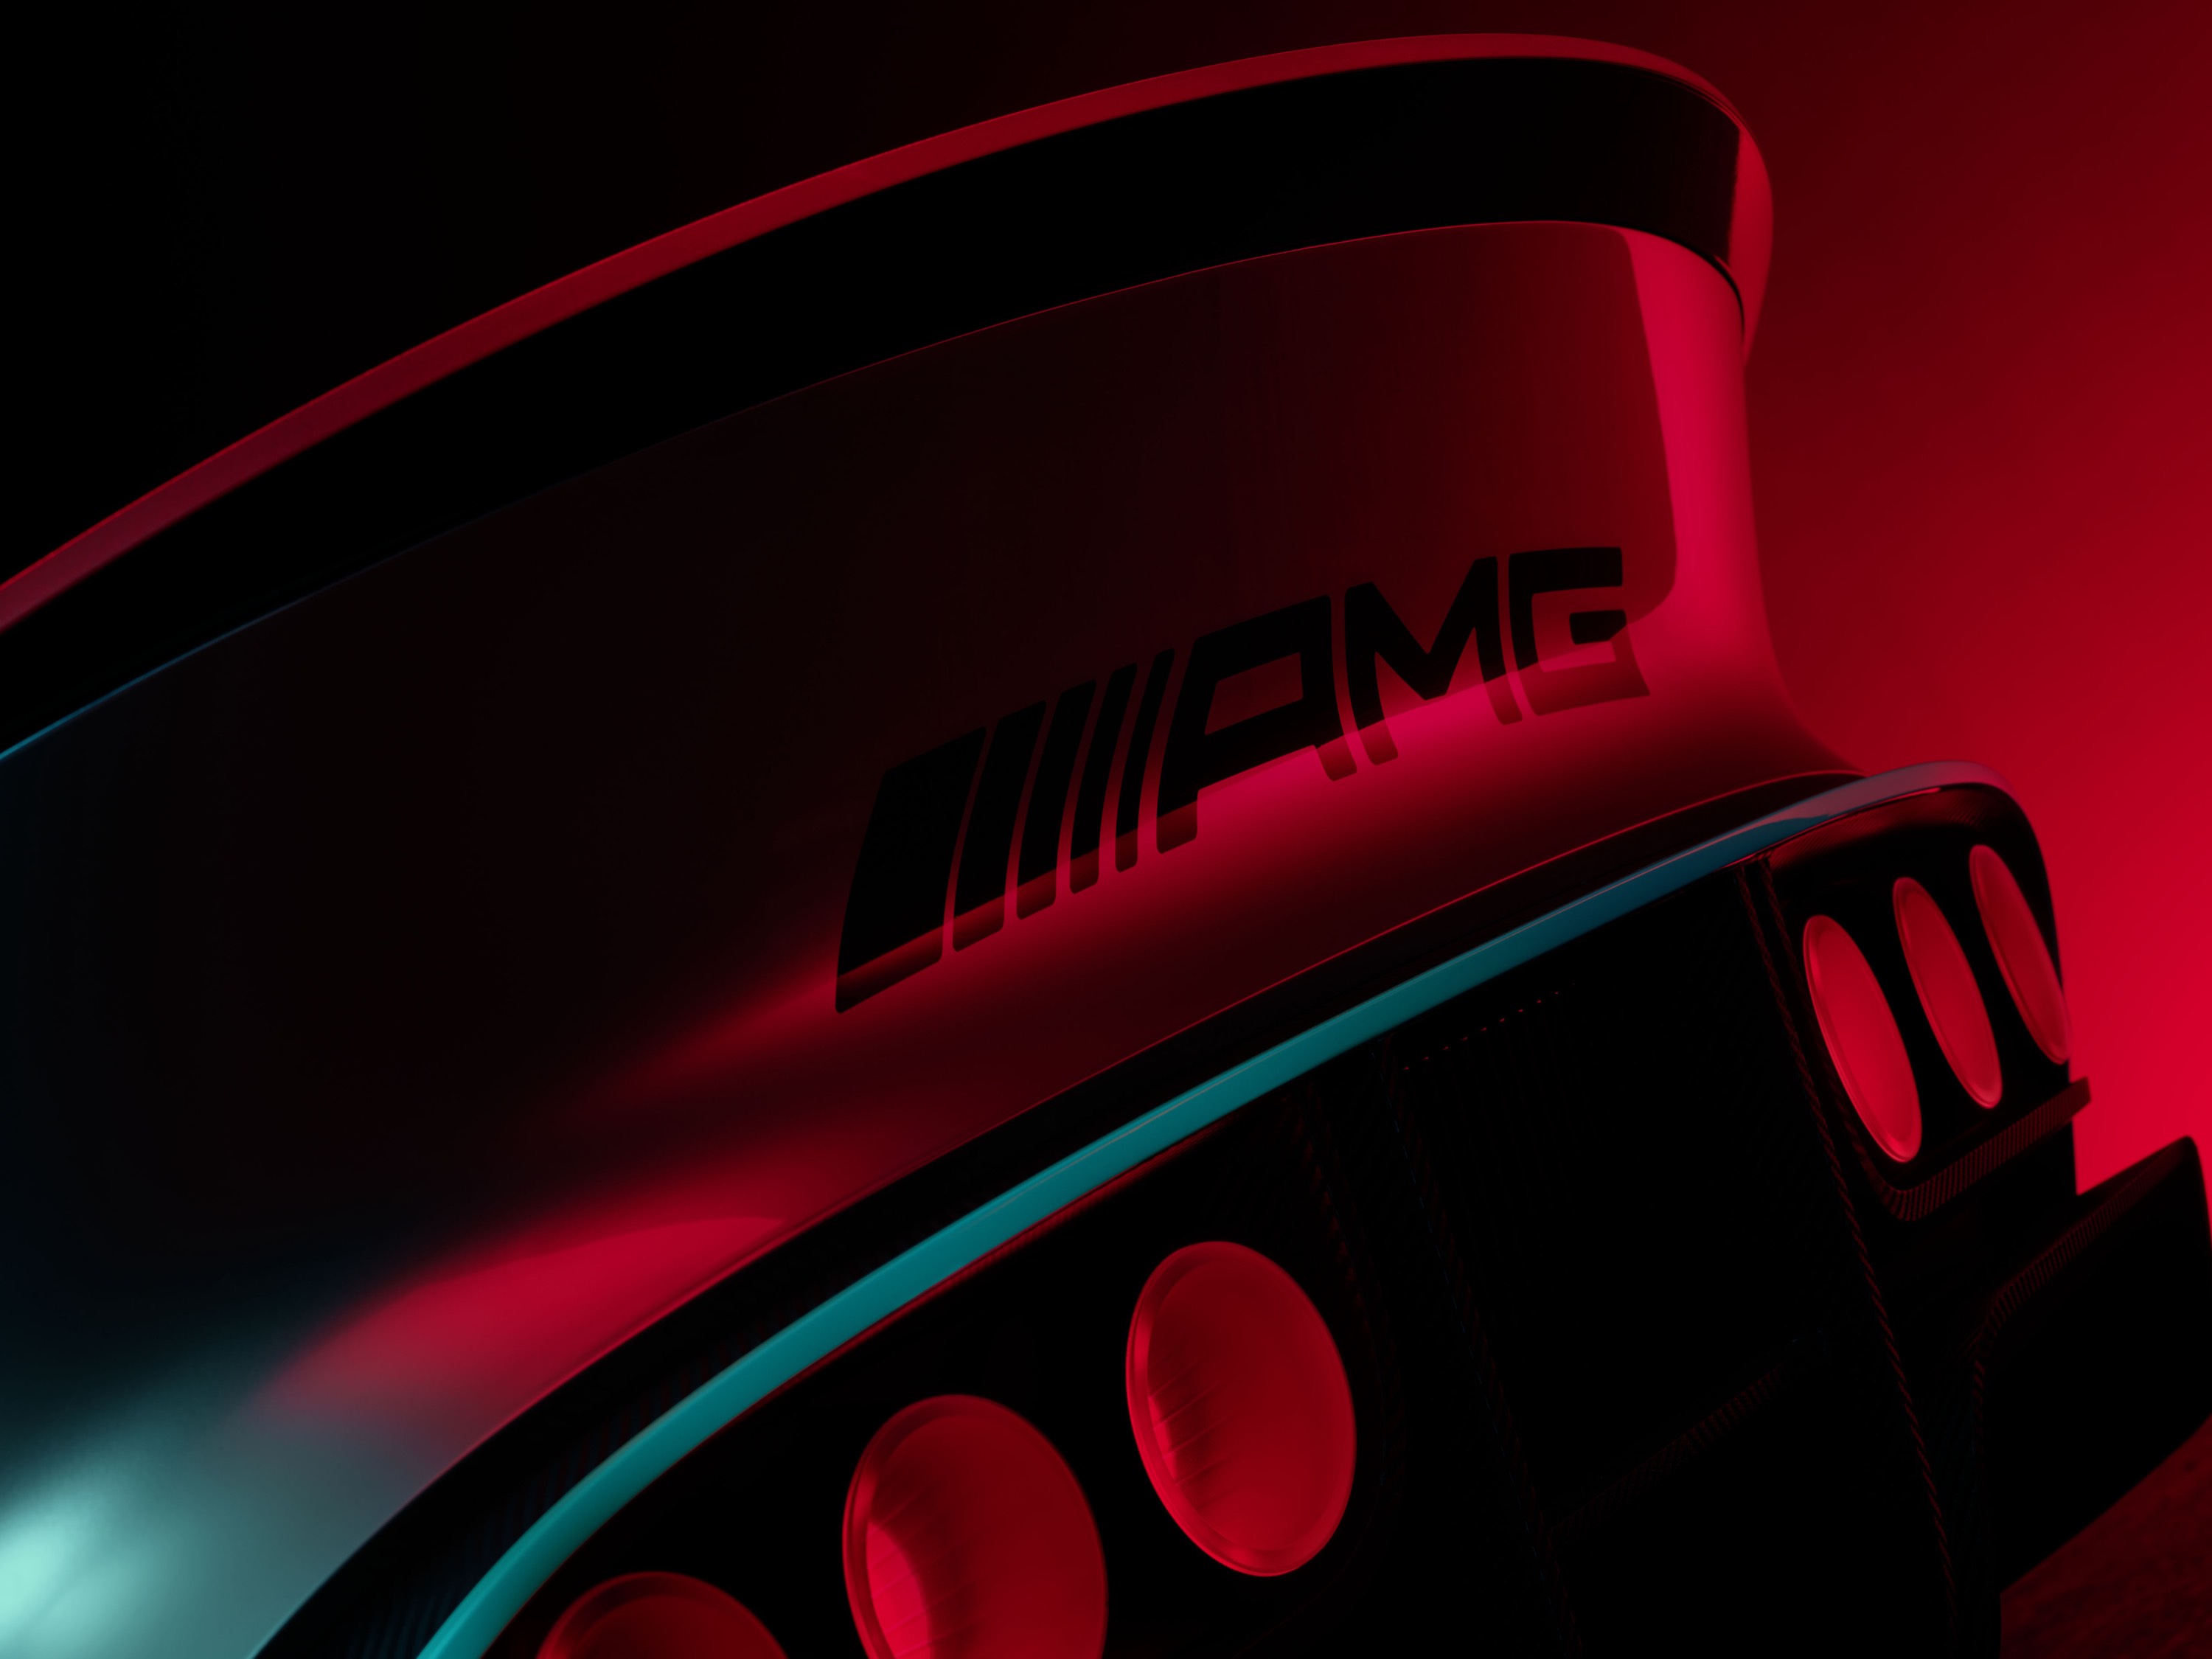 Mercedes-Benz Vision AMG Concept